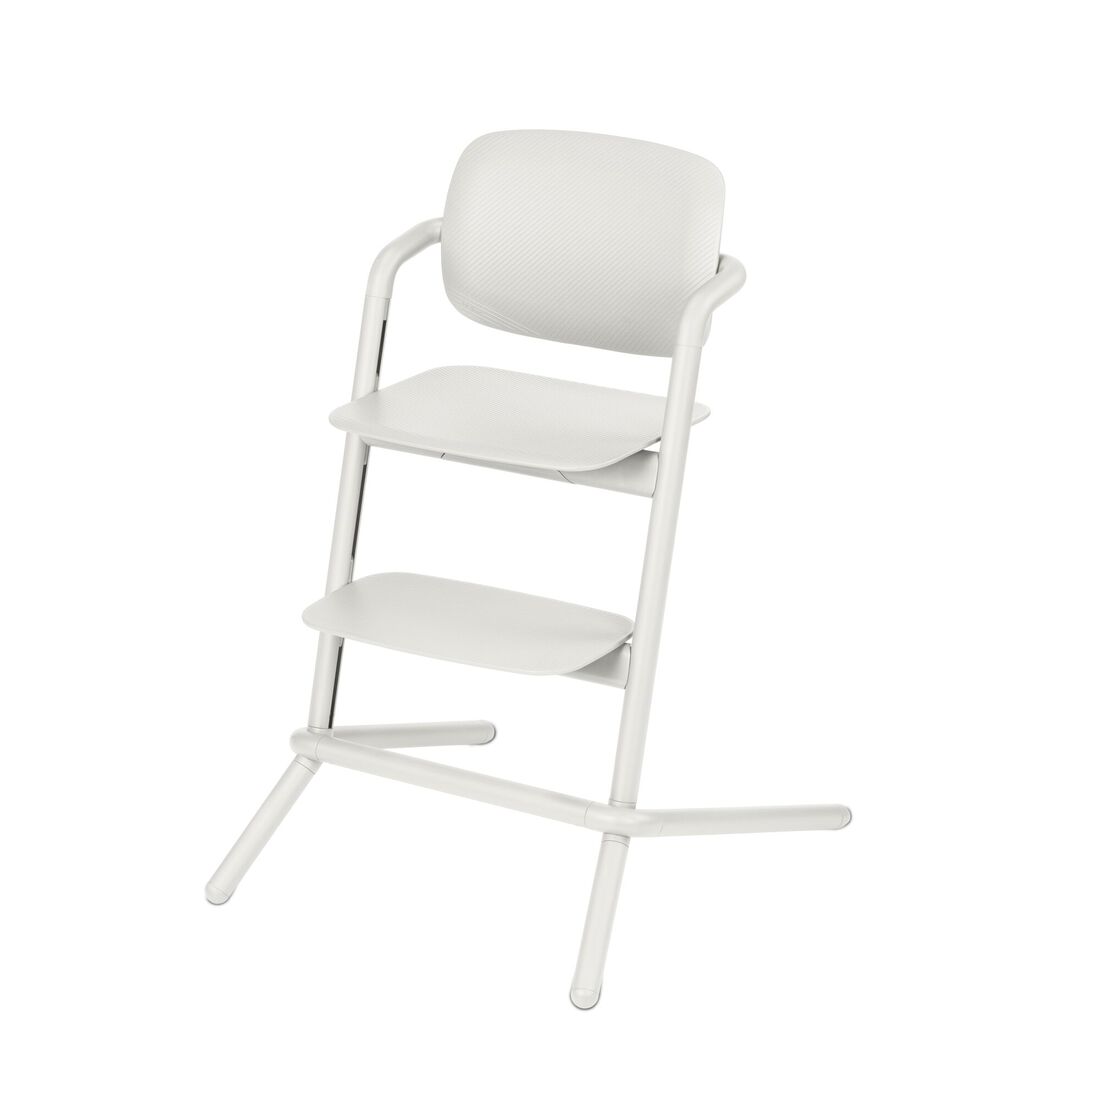 CYBEX Lemo Chair - Porcelaine White (Plastic) in Porcelaine White (Plastic) large image number 1